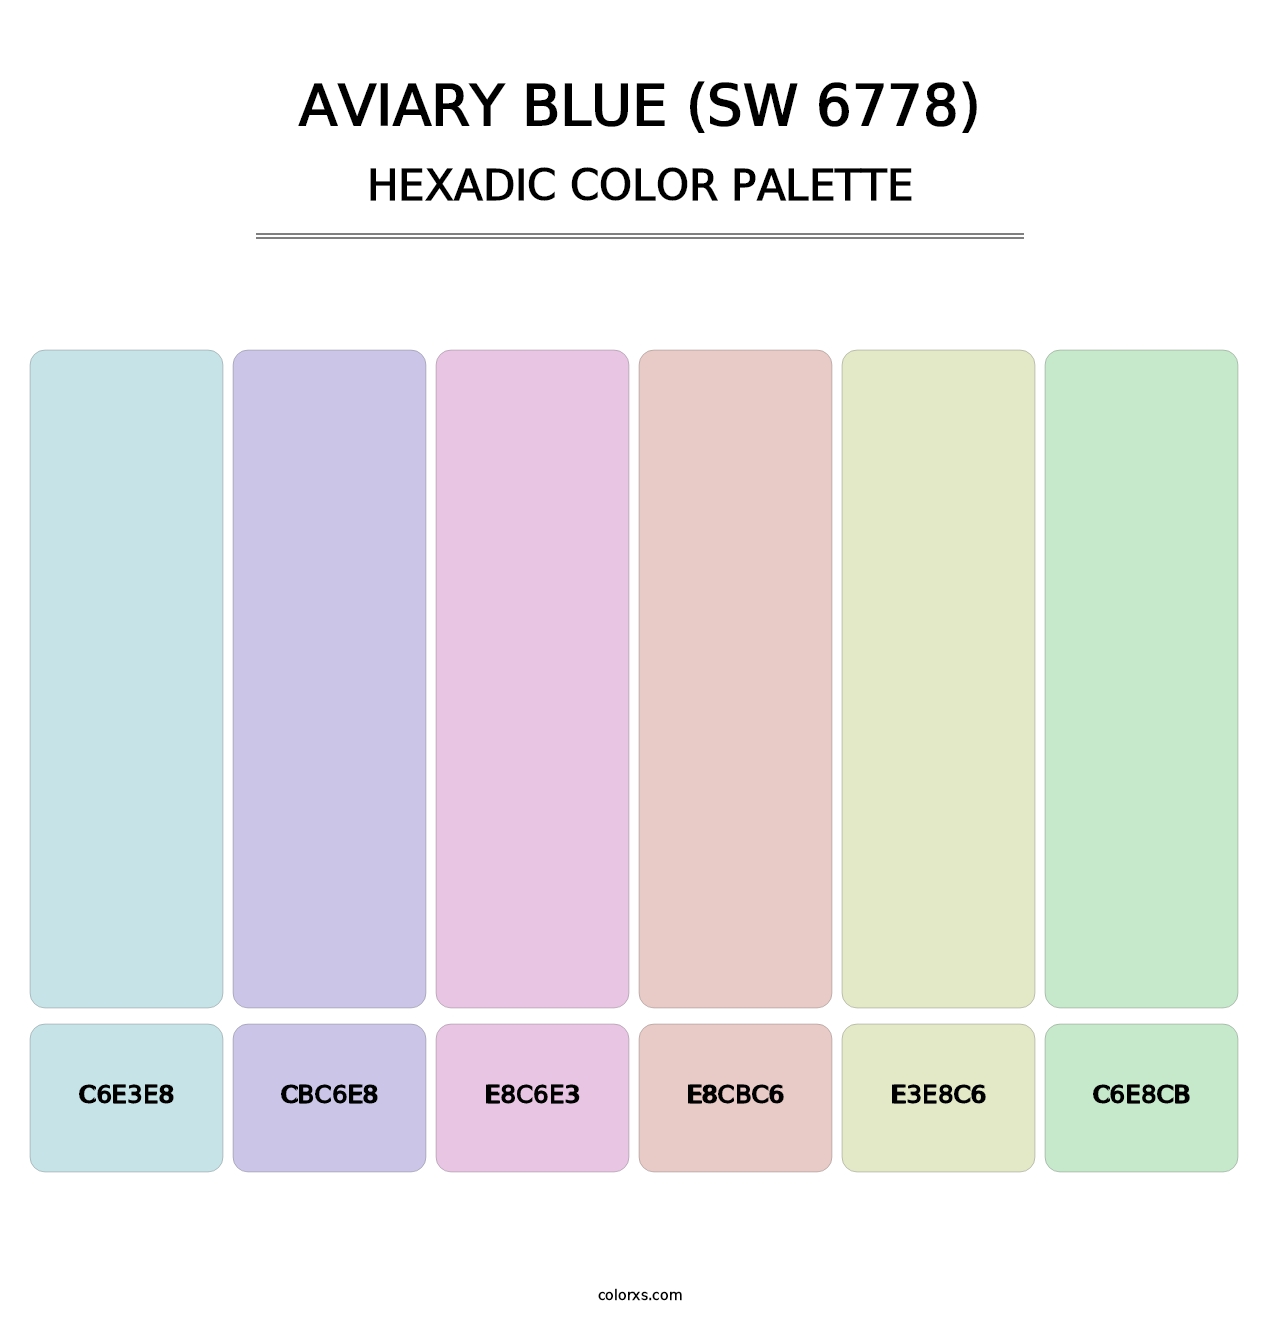 Aviary Blue (SW 6778) - Hexadic Color Palette